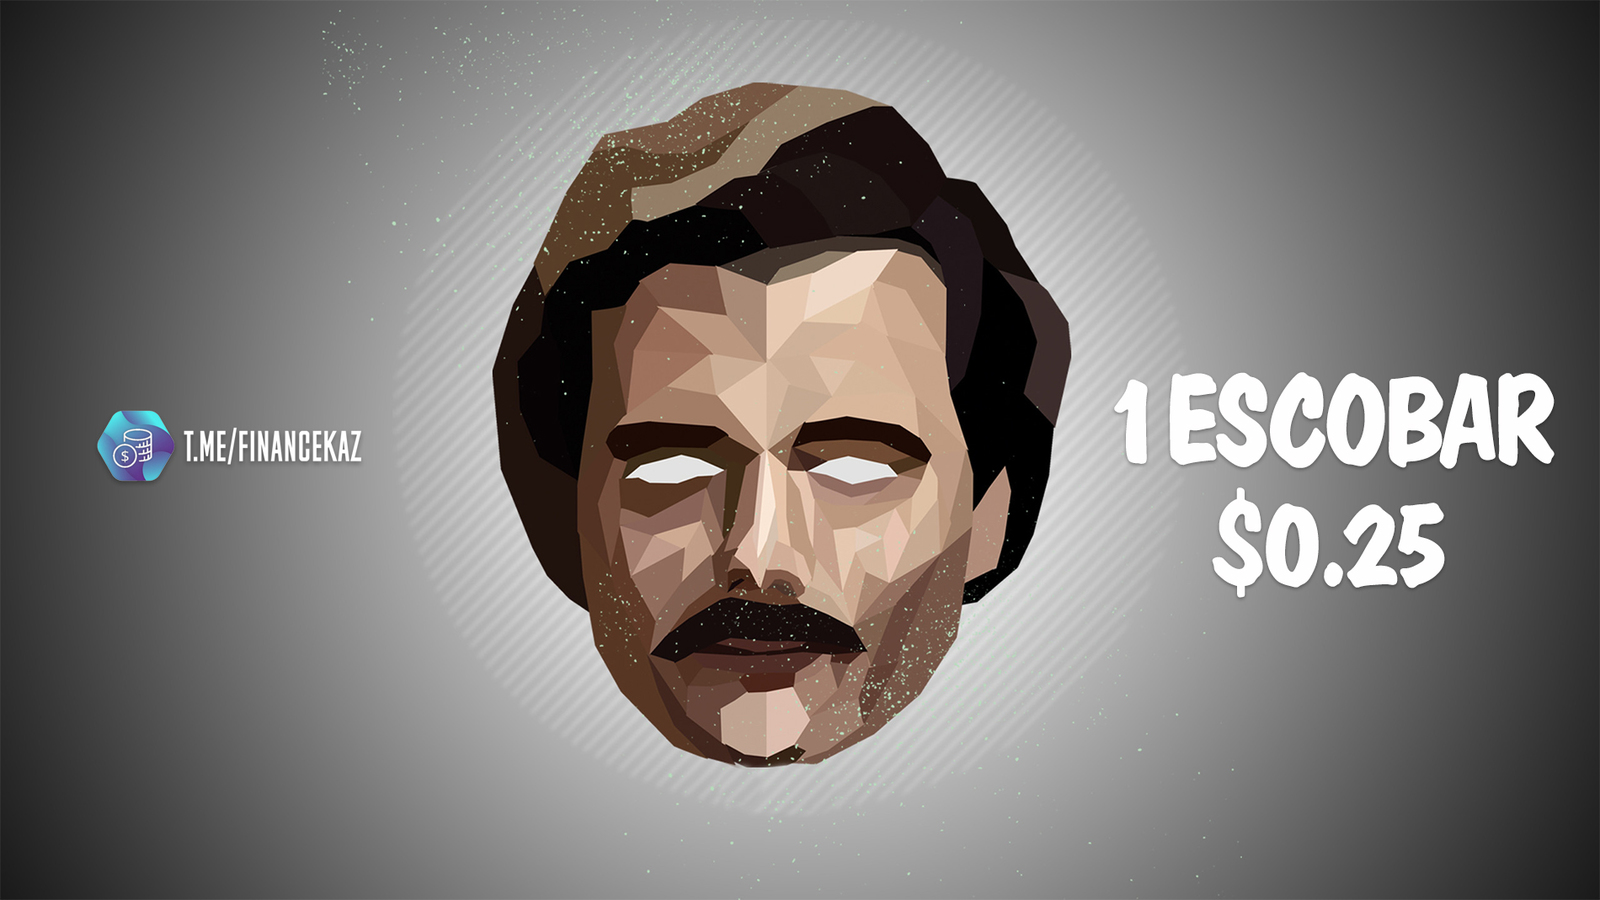 Escobar with us! - Pablo Escobar, USA, Cryptocurrency, Donald Trump